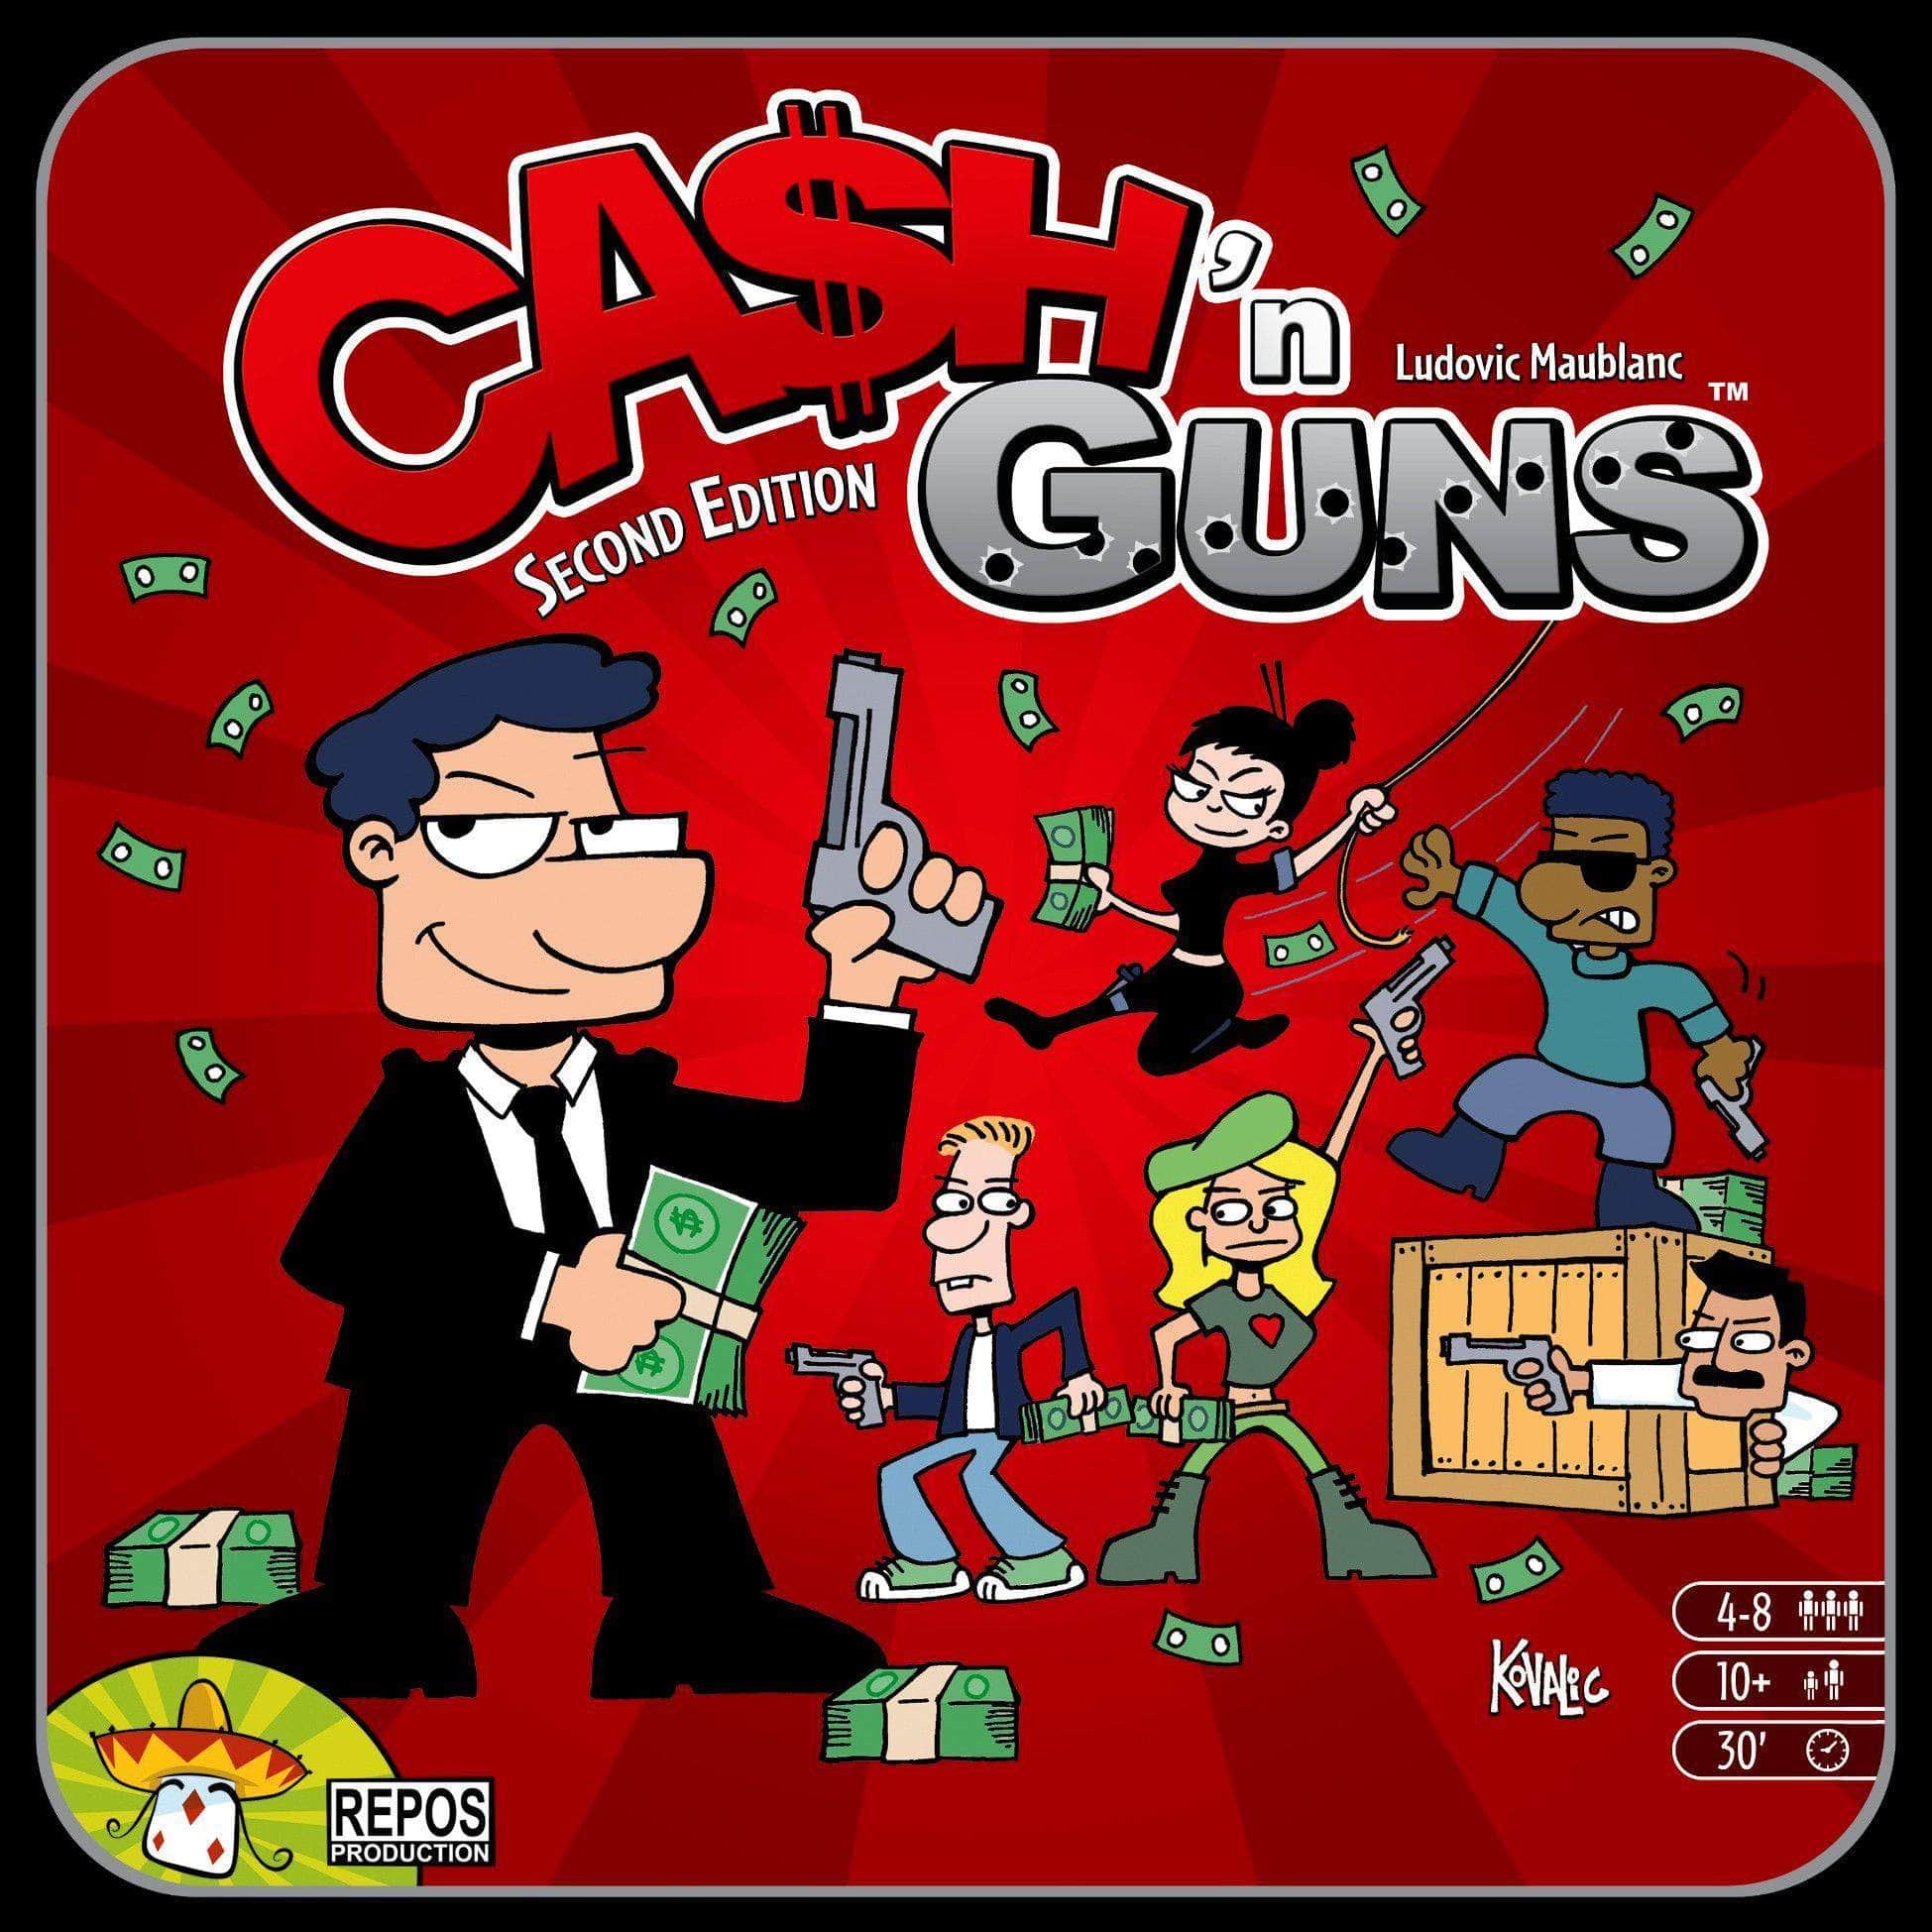 Ca $ H 'n Guns (toinen painos) (vähittäiskaupan painos) vähittäiskaupan lautapeli Asterion Press KS800399a